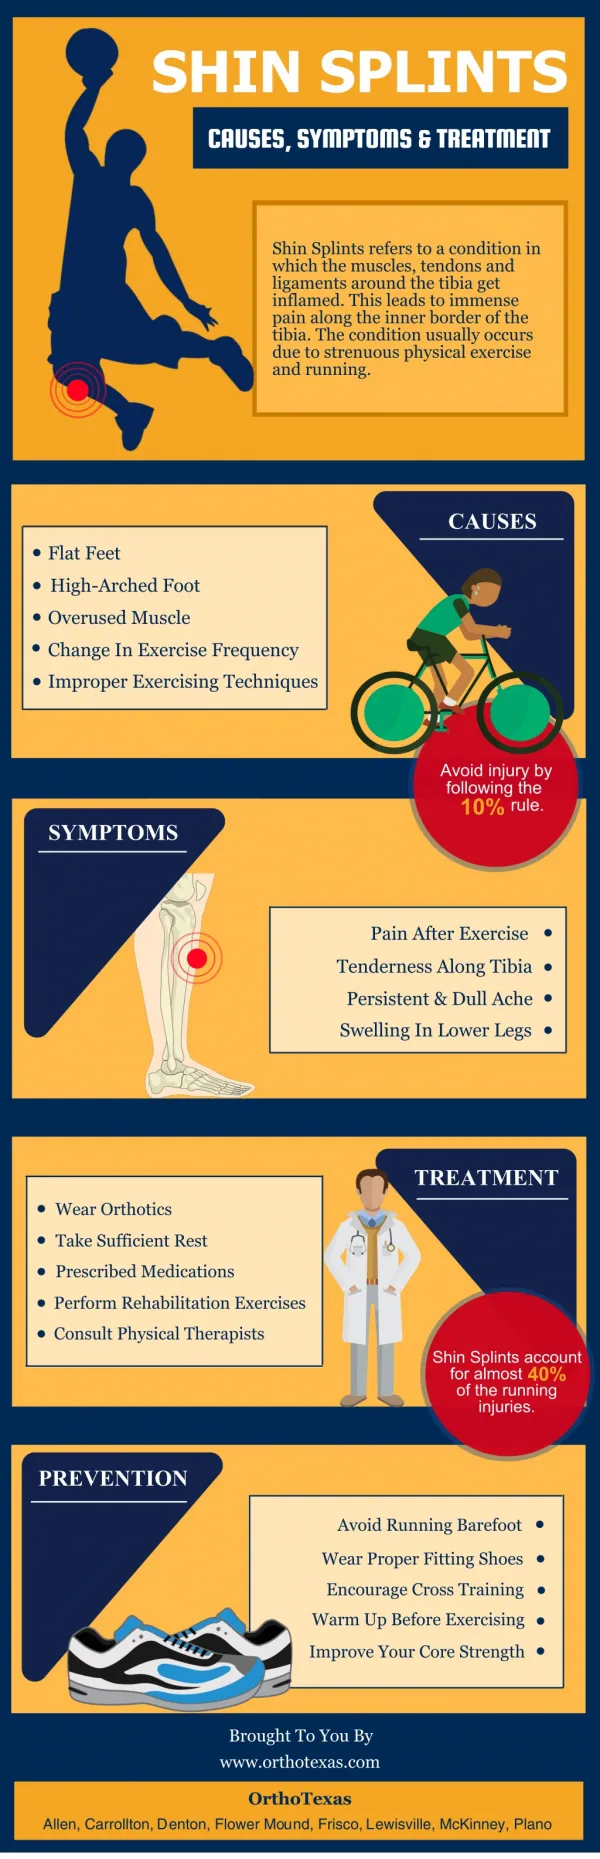 Shin Splints: Causes, Symptoms And Treatment